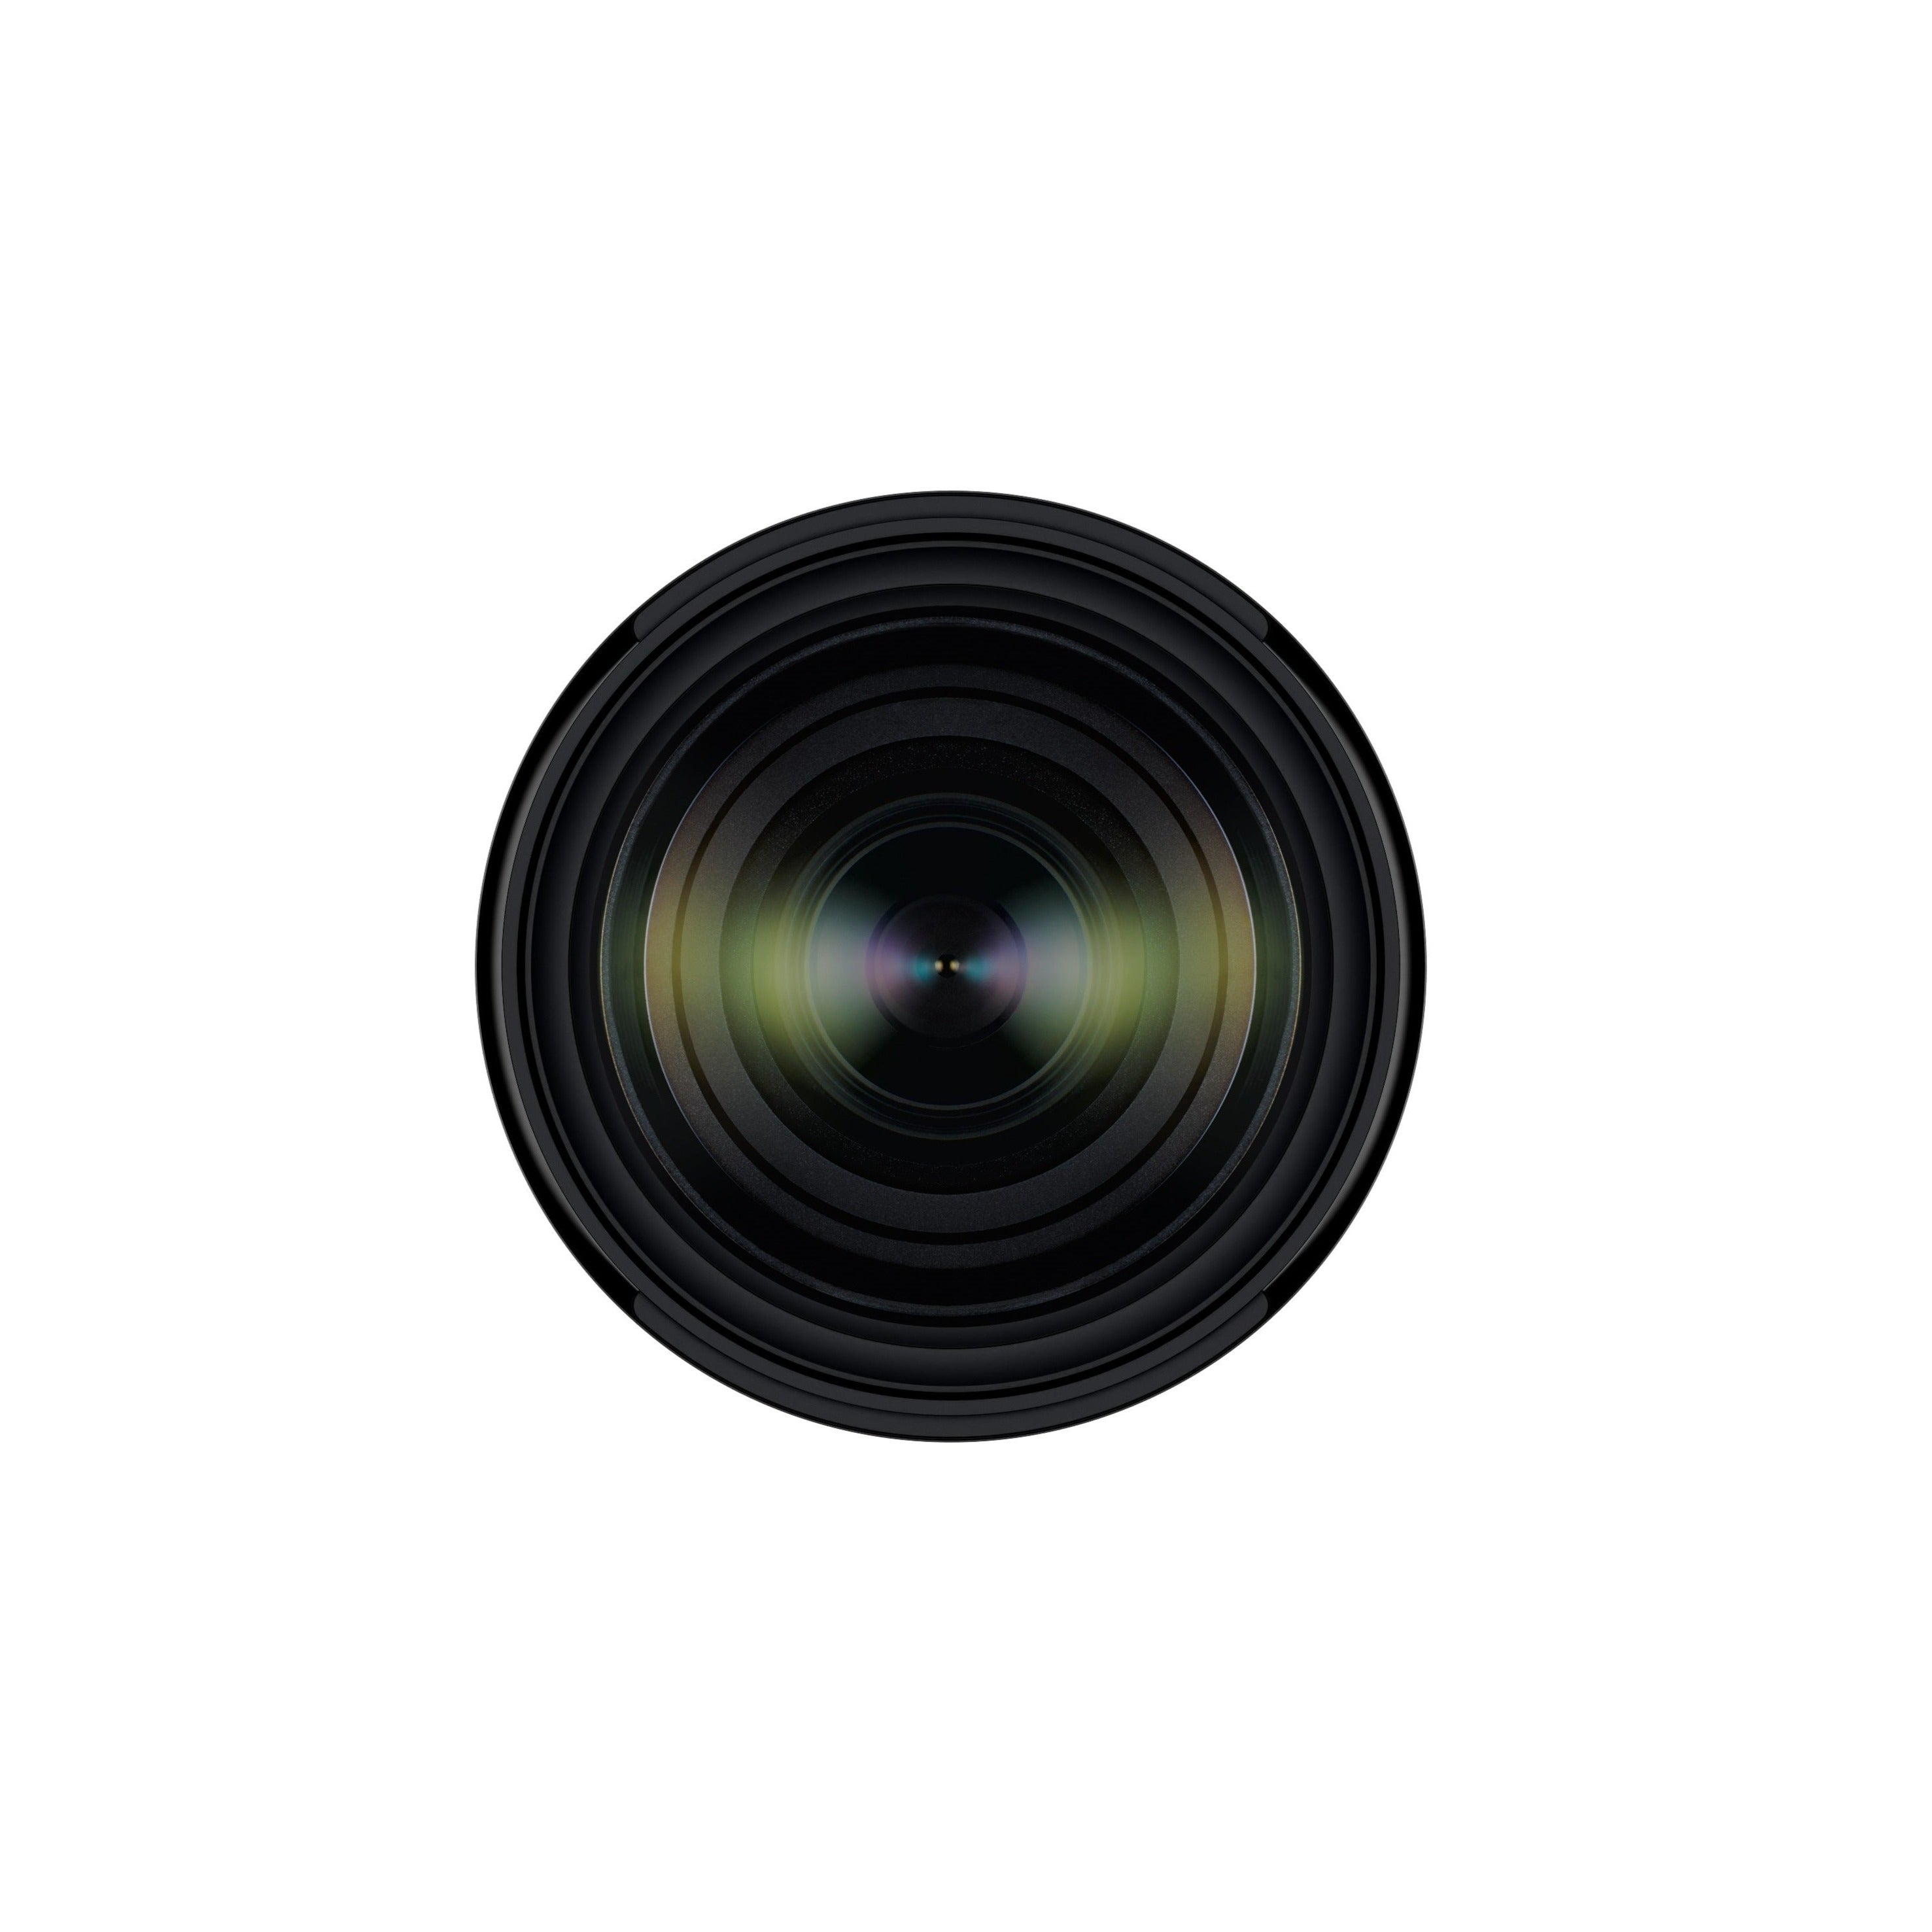 Tamron 28-200mm F2.8-5.6 Di III RXD Sony FE Lens